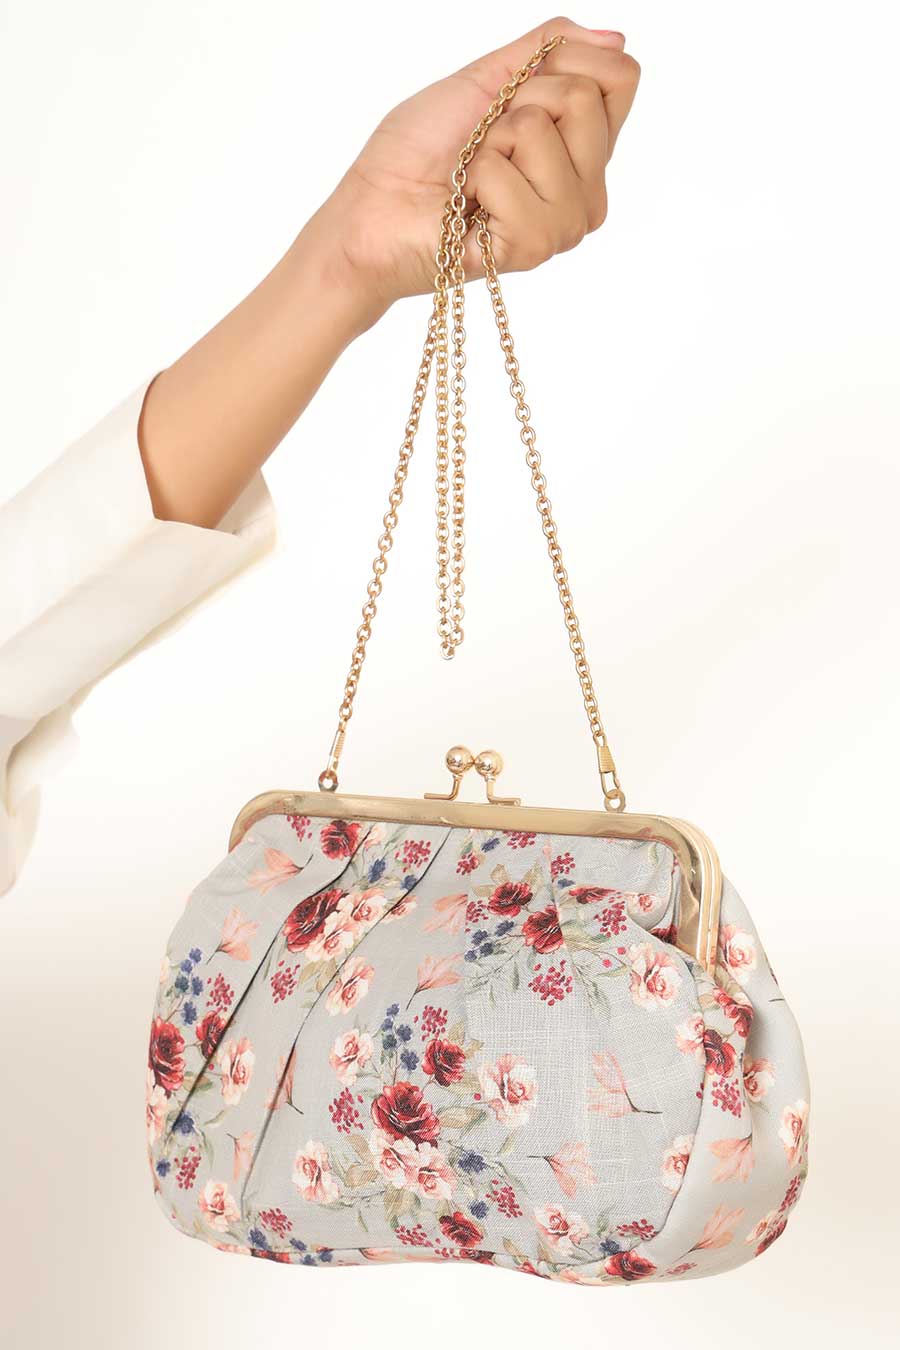 Buy Women's Clutch Bags Online Australia | Clutch Bags For Sale